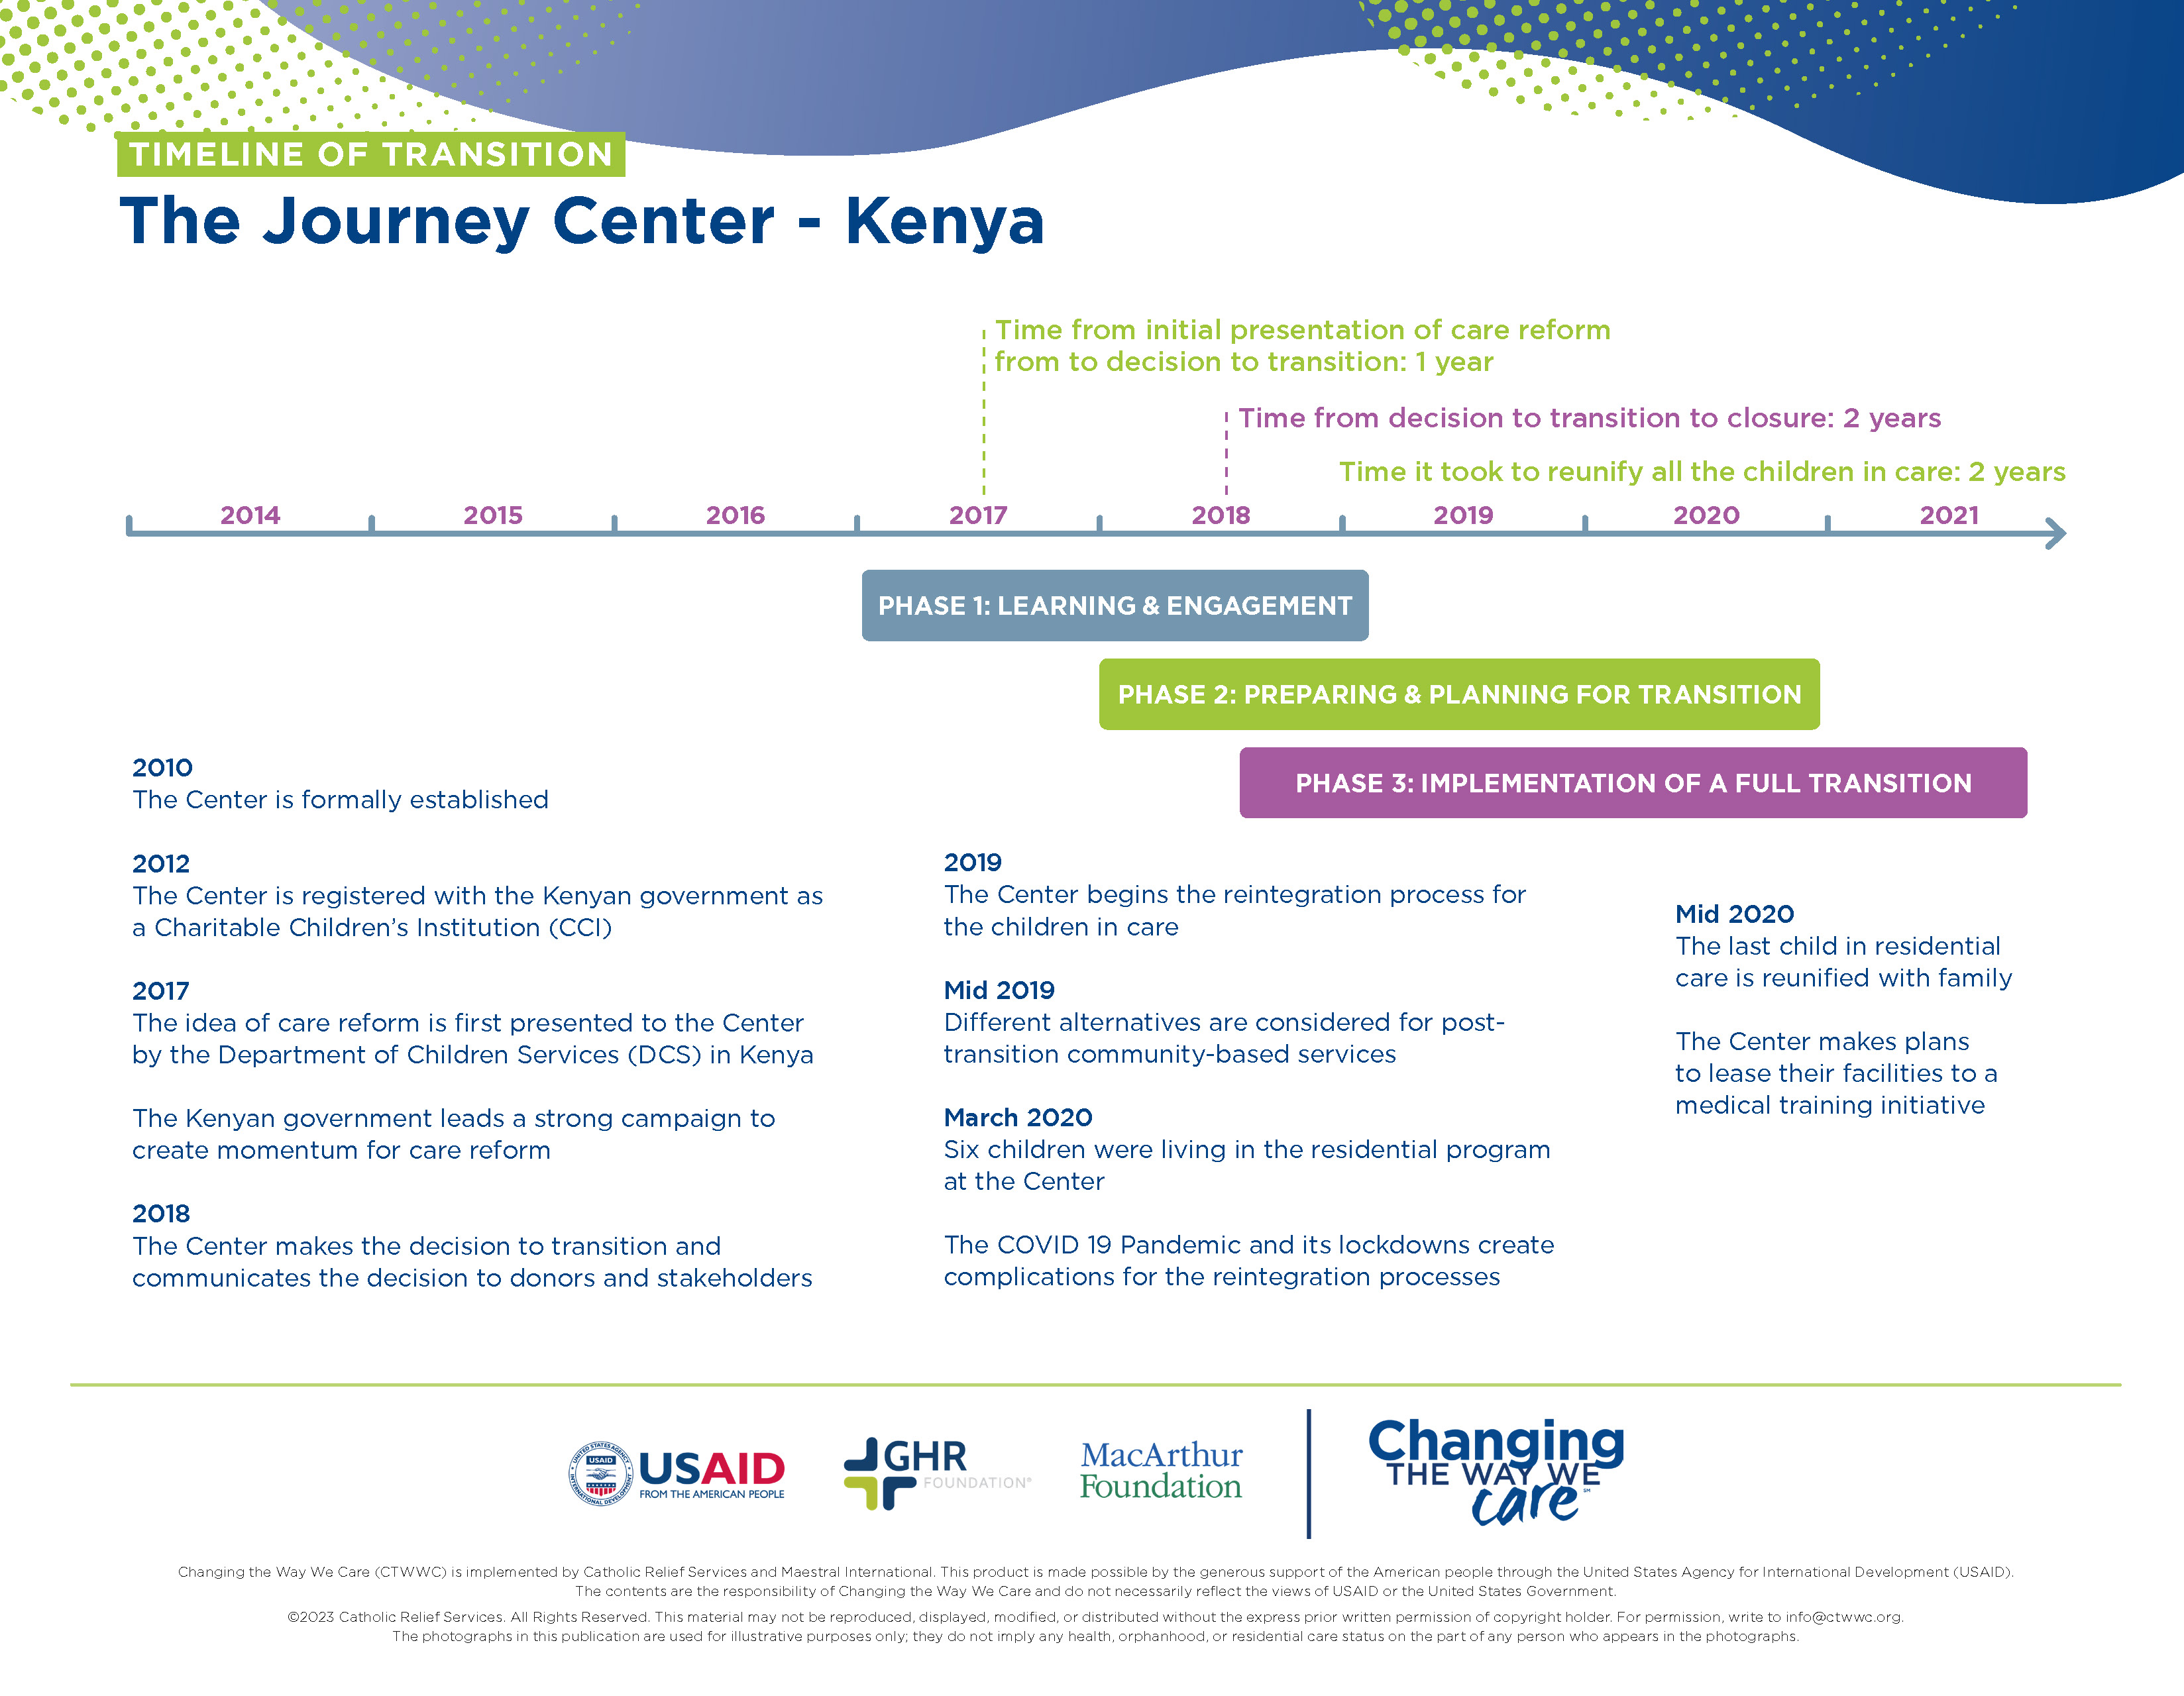 Timeline of Transition: The Journey Center